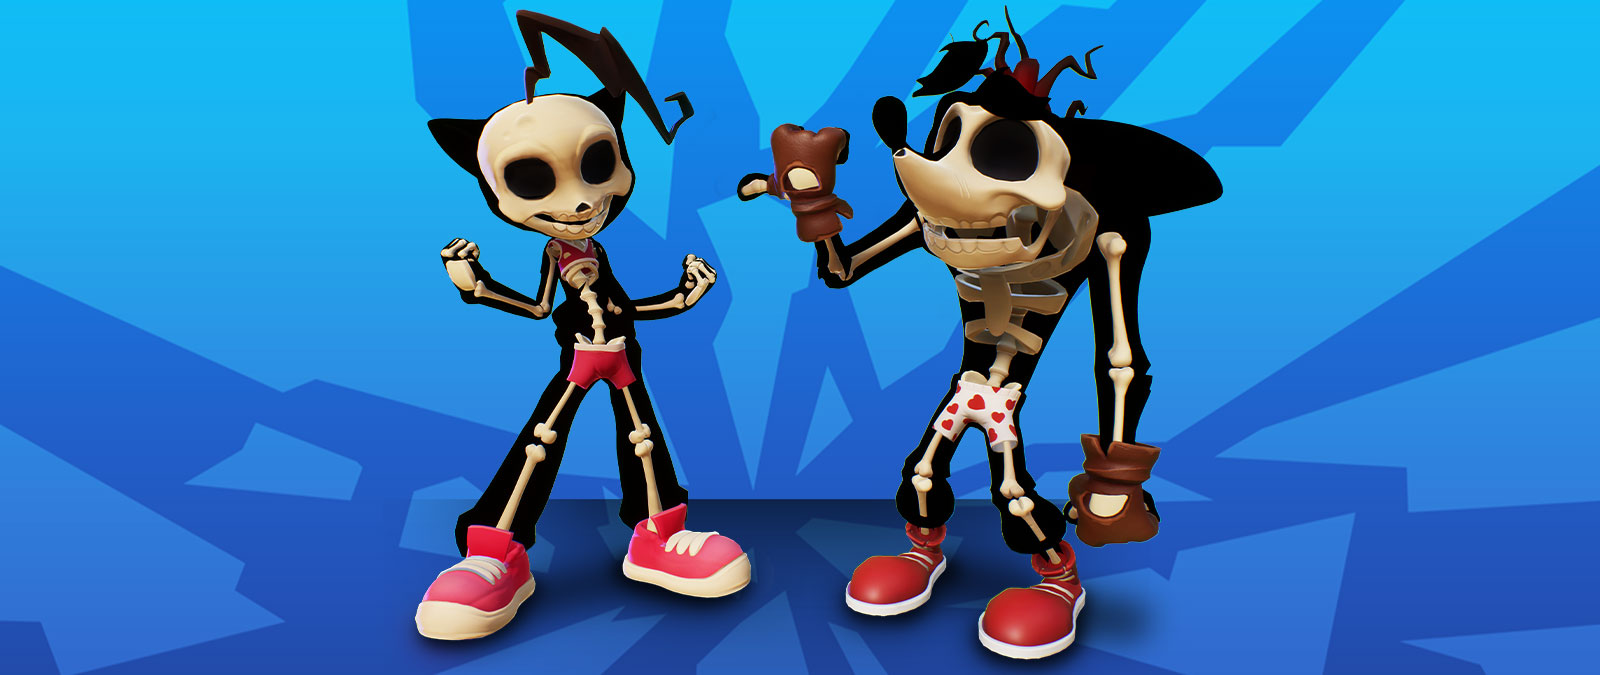 Os esqueletos de Crash e Coco usando roupas de baixo.